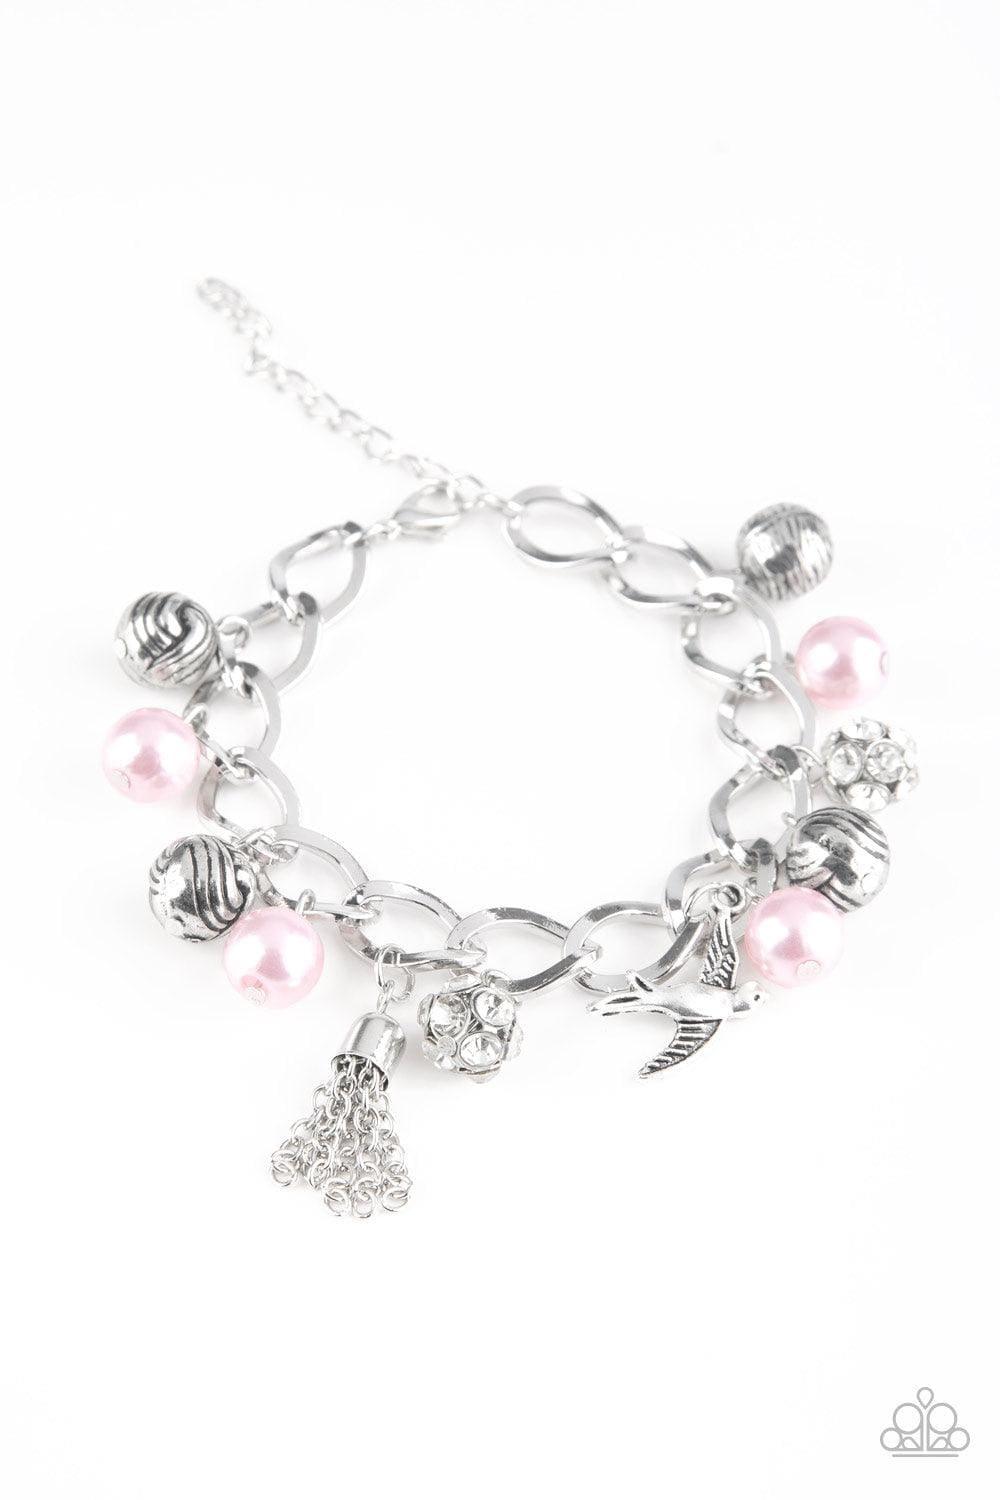 Paparazzi Accessories - Lady Love Dove - Pink Bracelet - Bling by JessieK